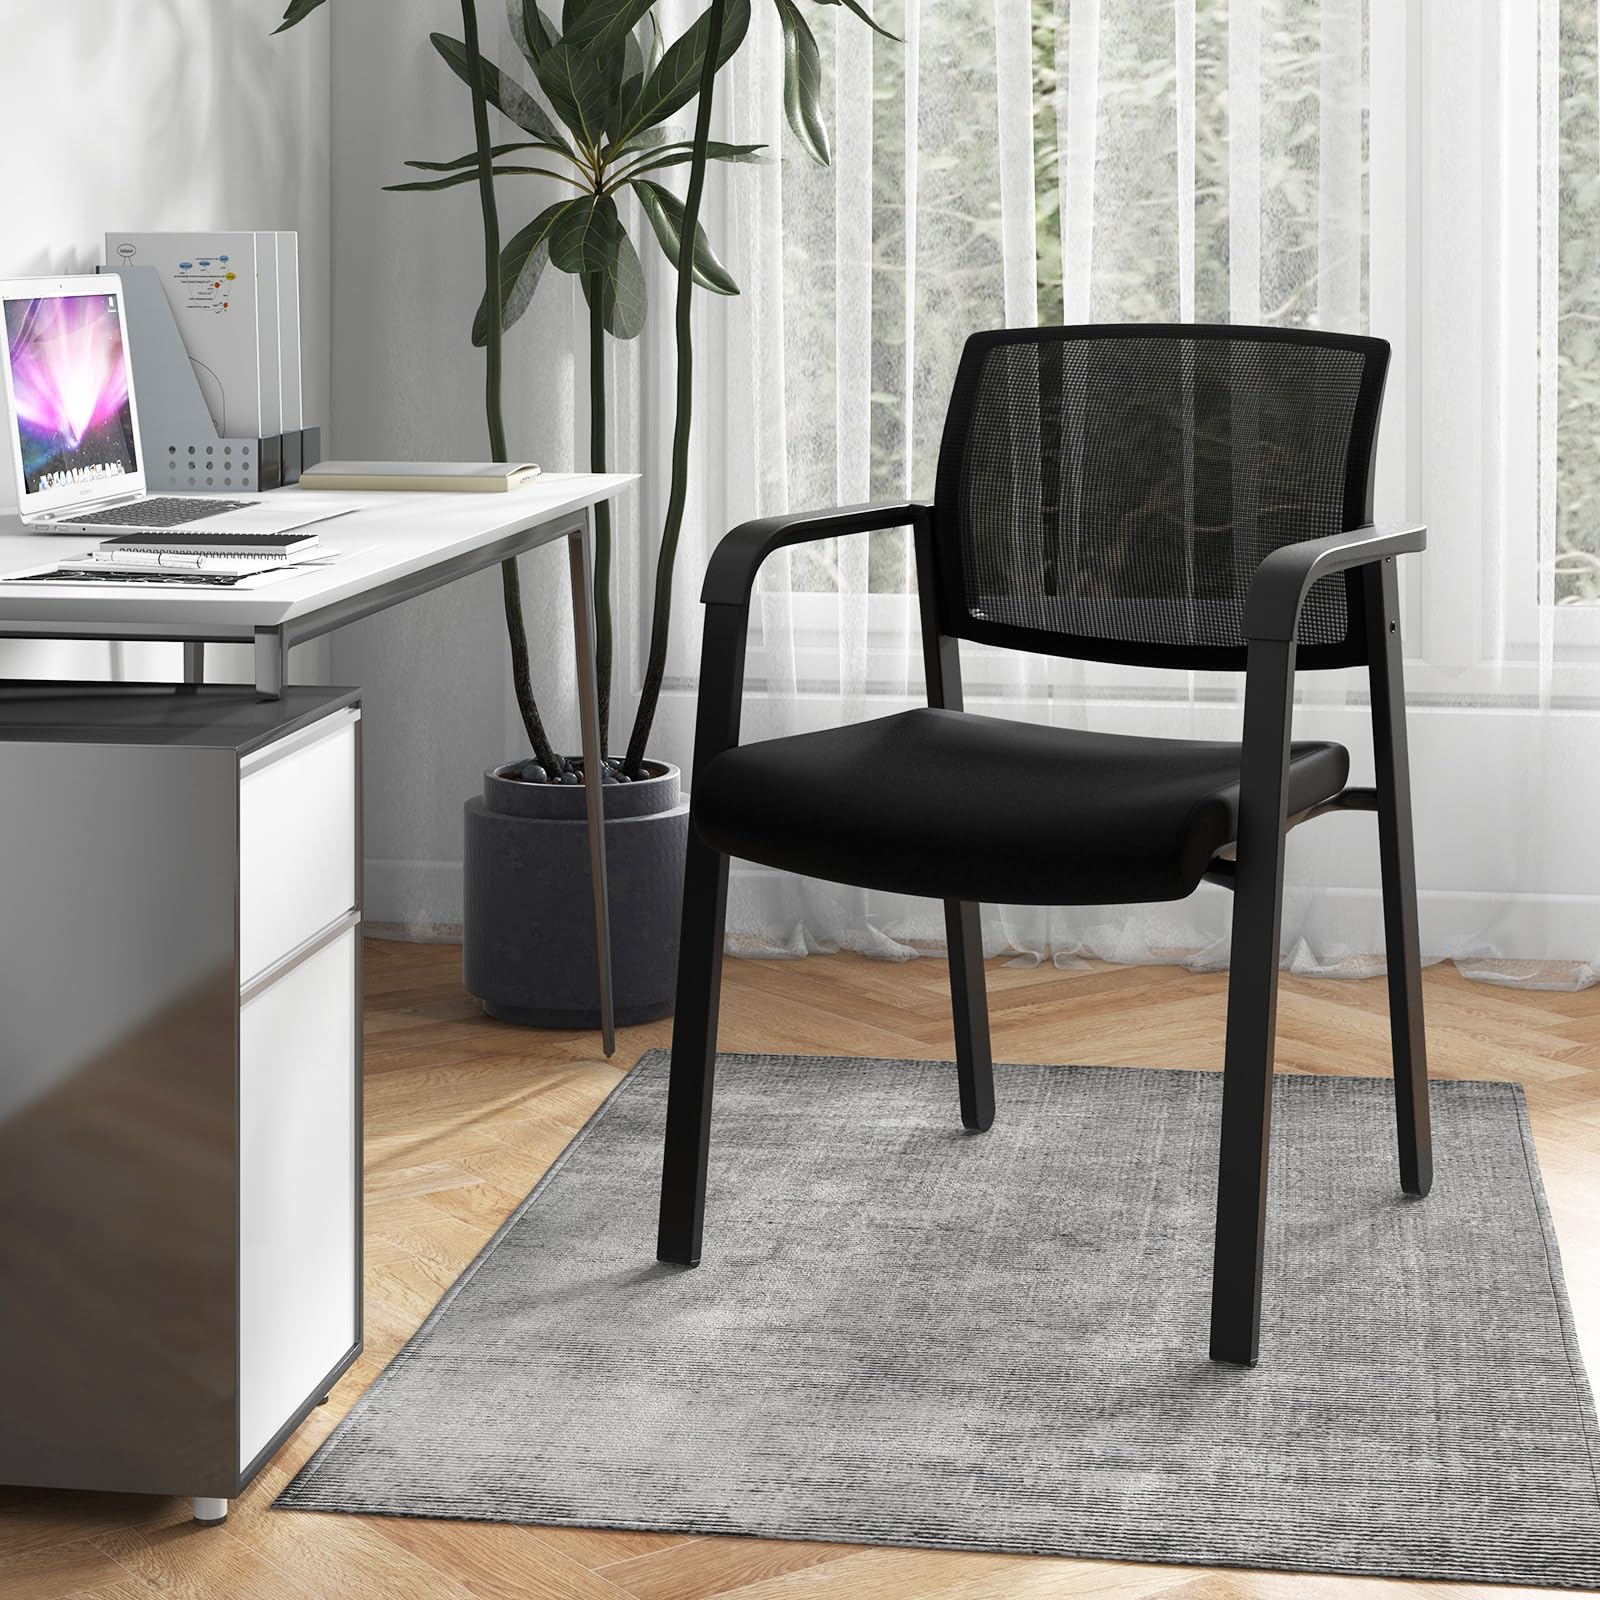 Reception Room Chair Set - Giantex